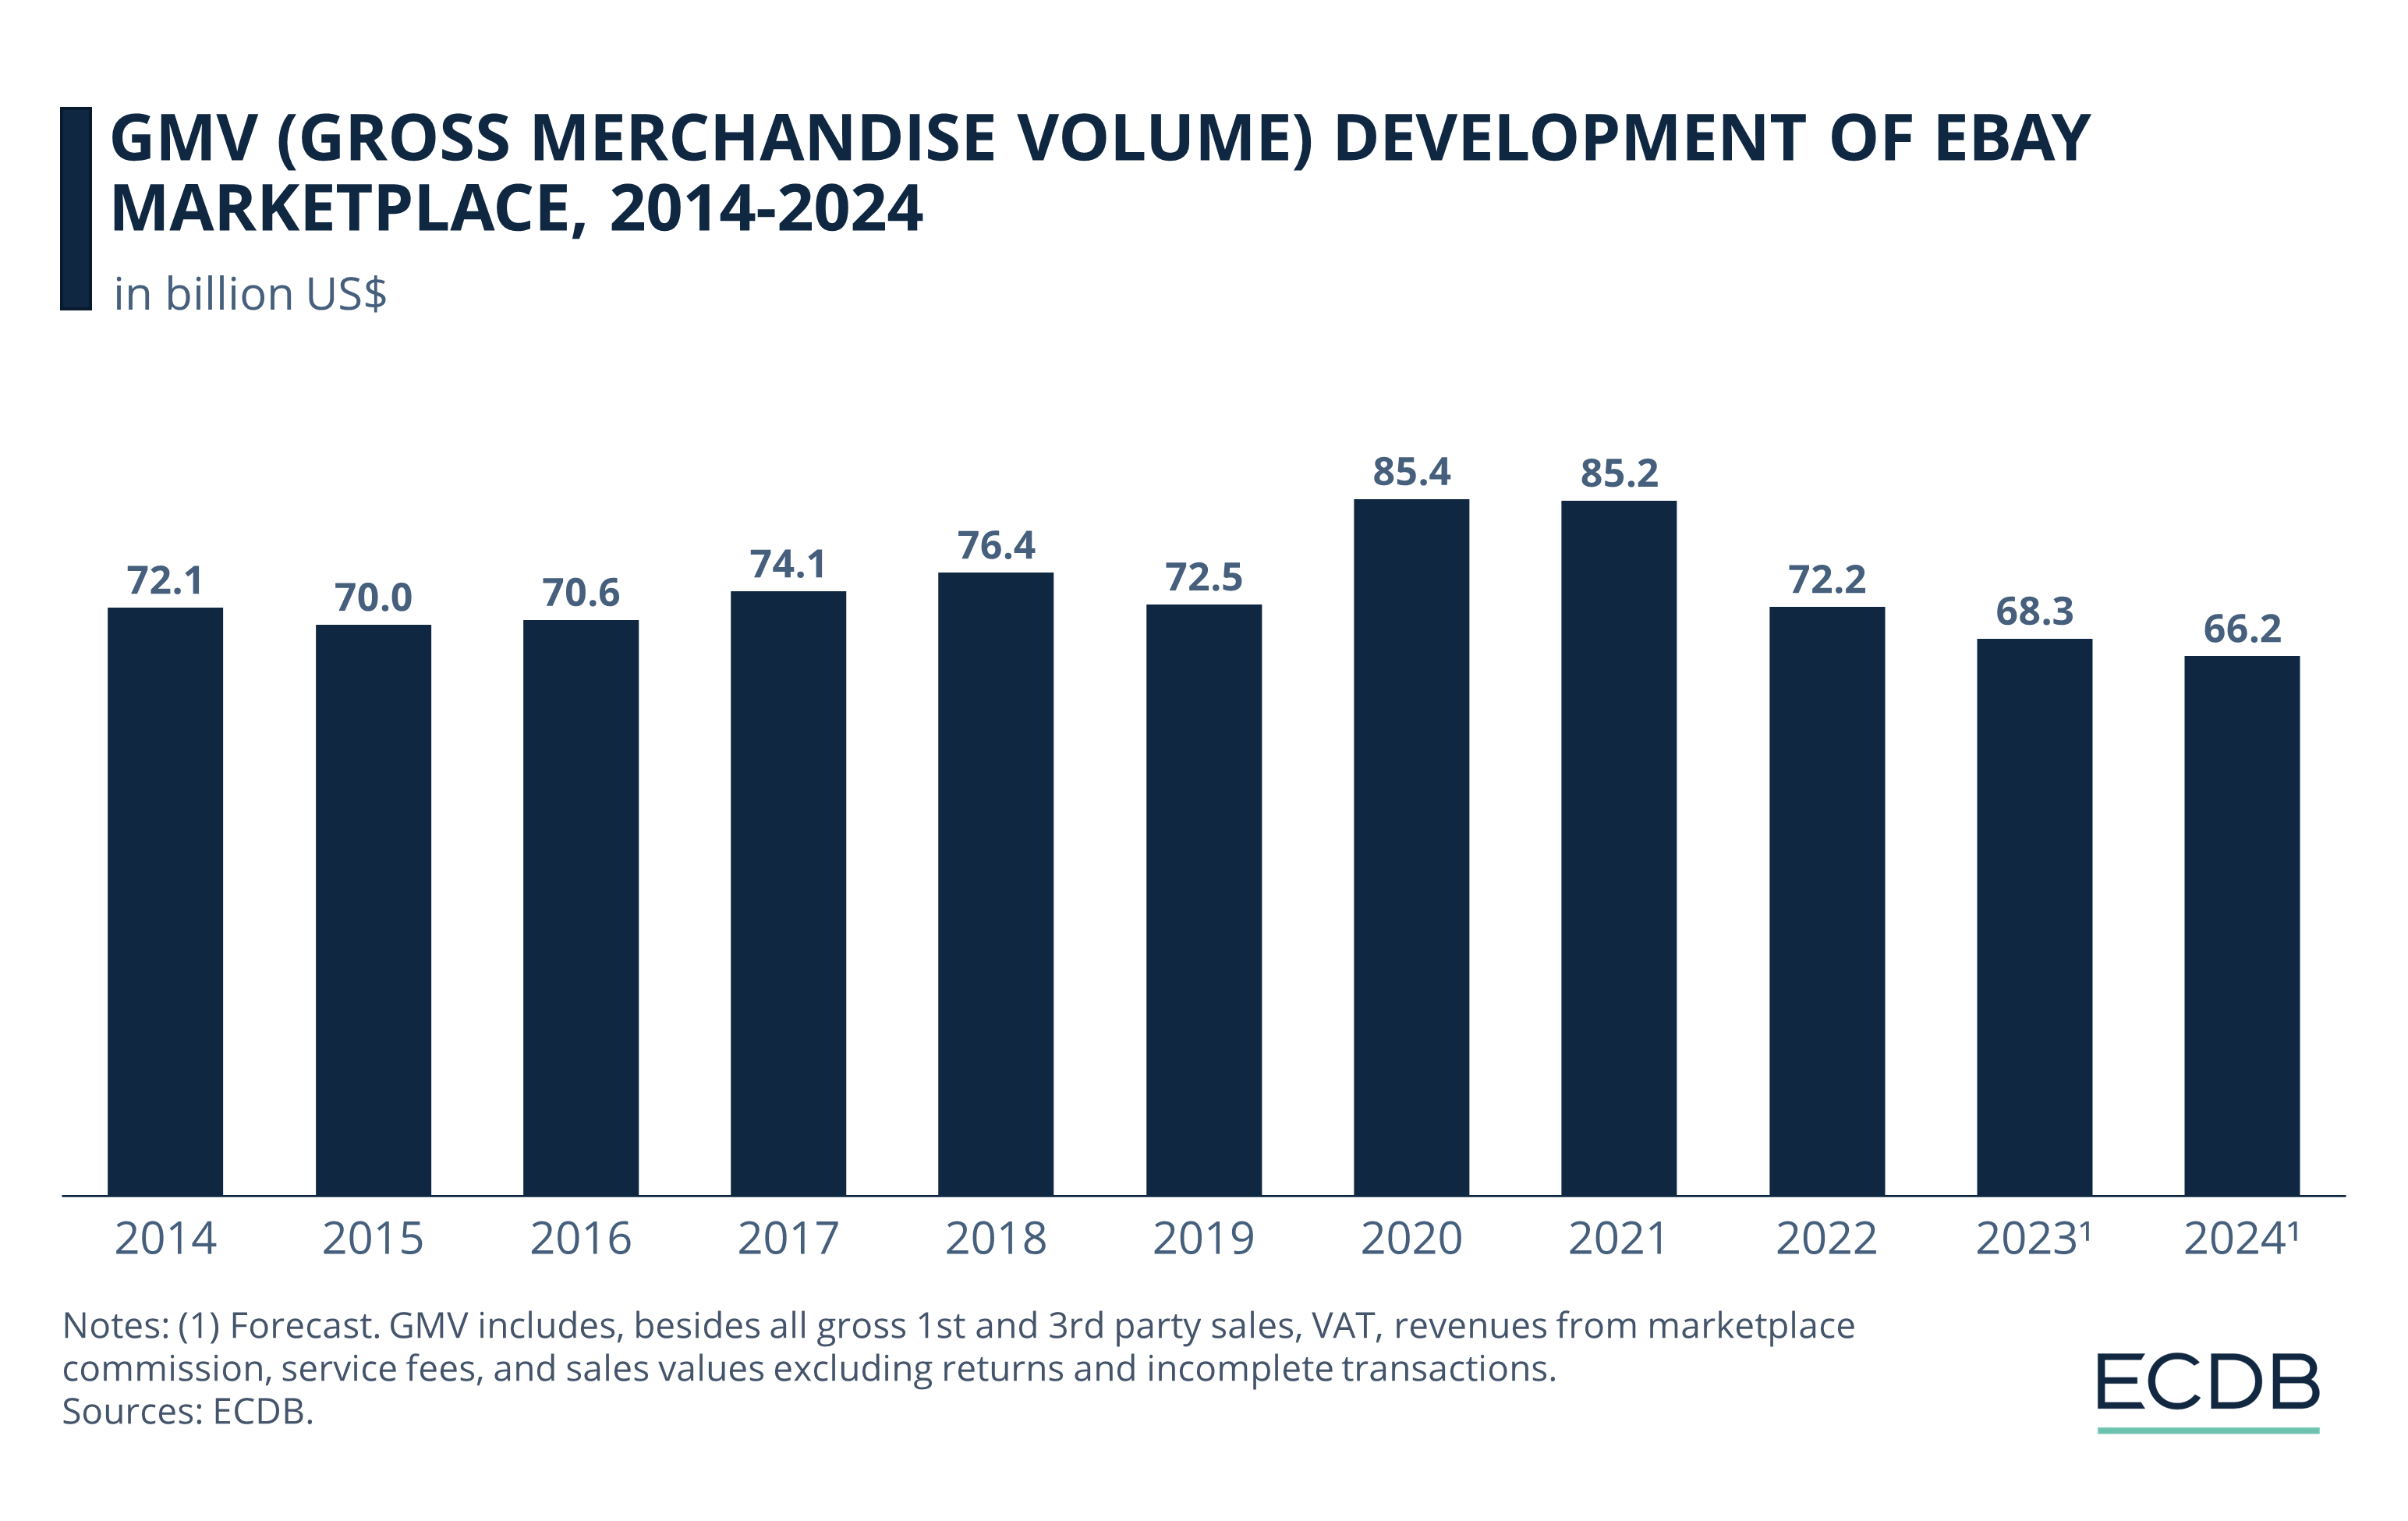 GMV (Gross Merchandise Volume) Development of eBay Marketplace, 2014-2024